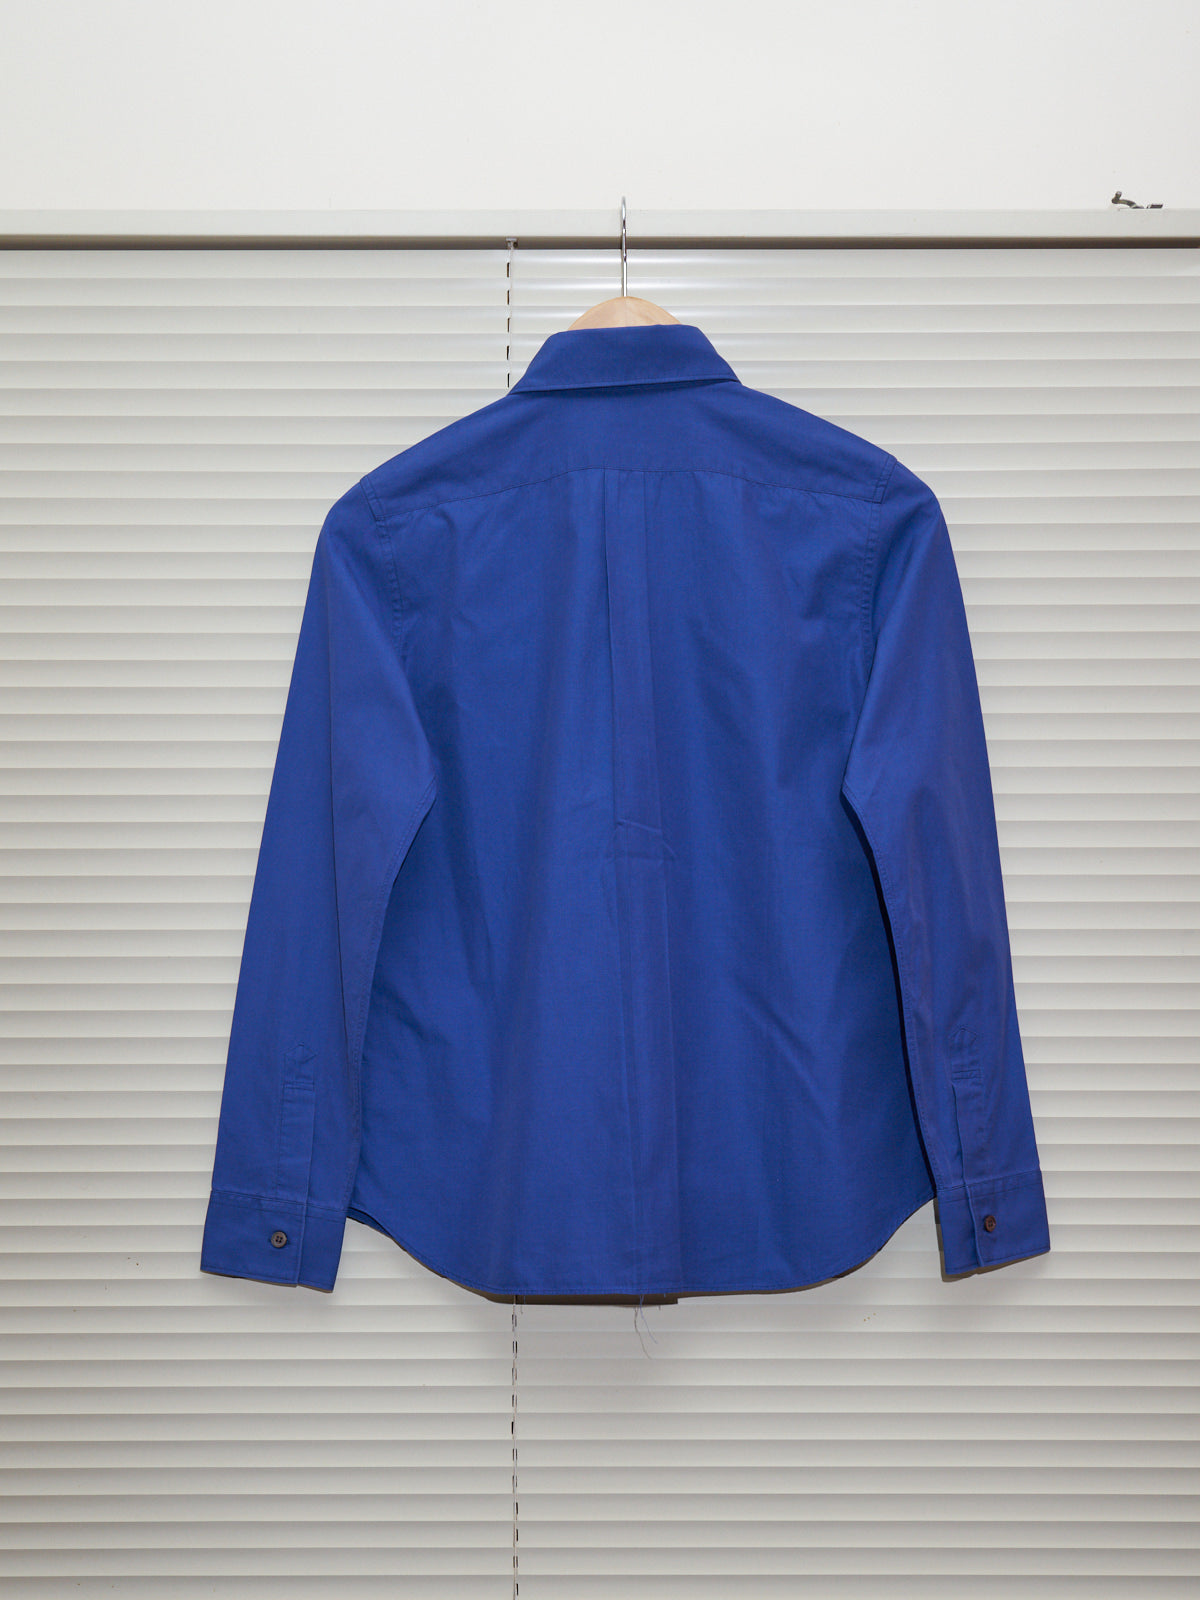 Masaki Matsushima 1990s blue cotton shirt - womens S M